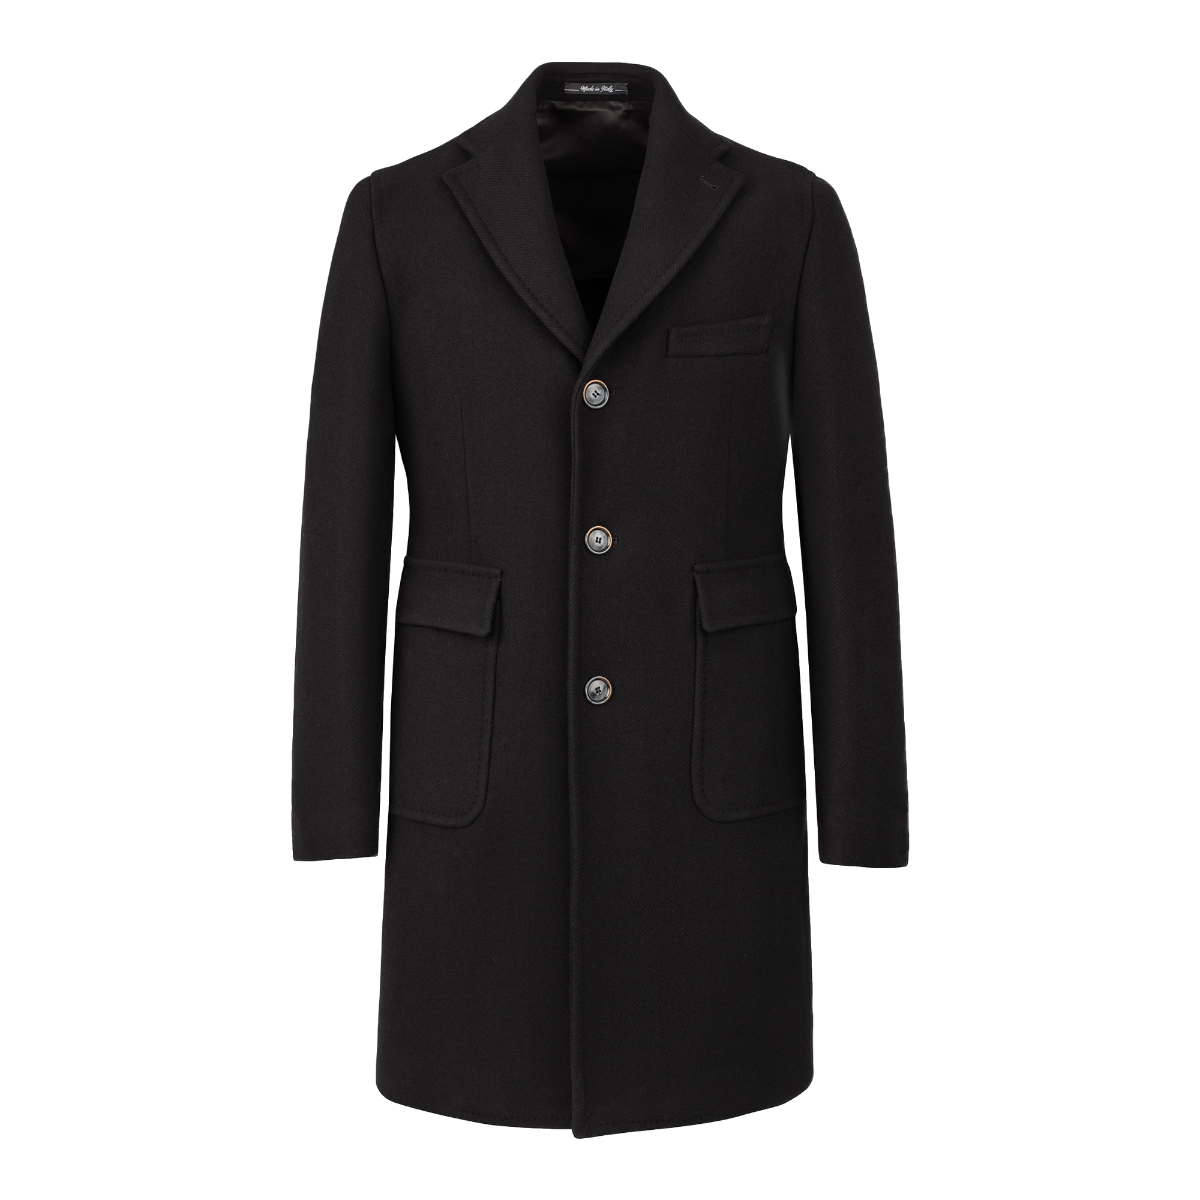 Plain Black Coat Blma135W.1.1